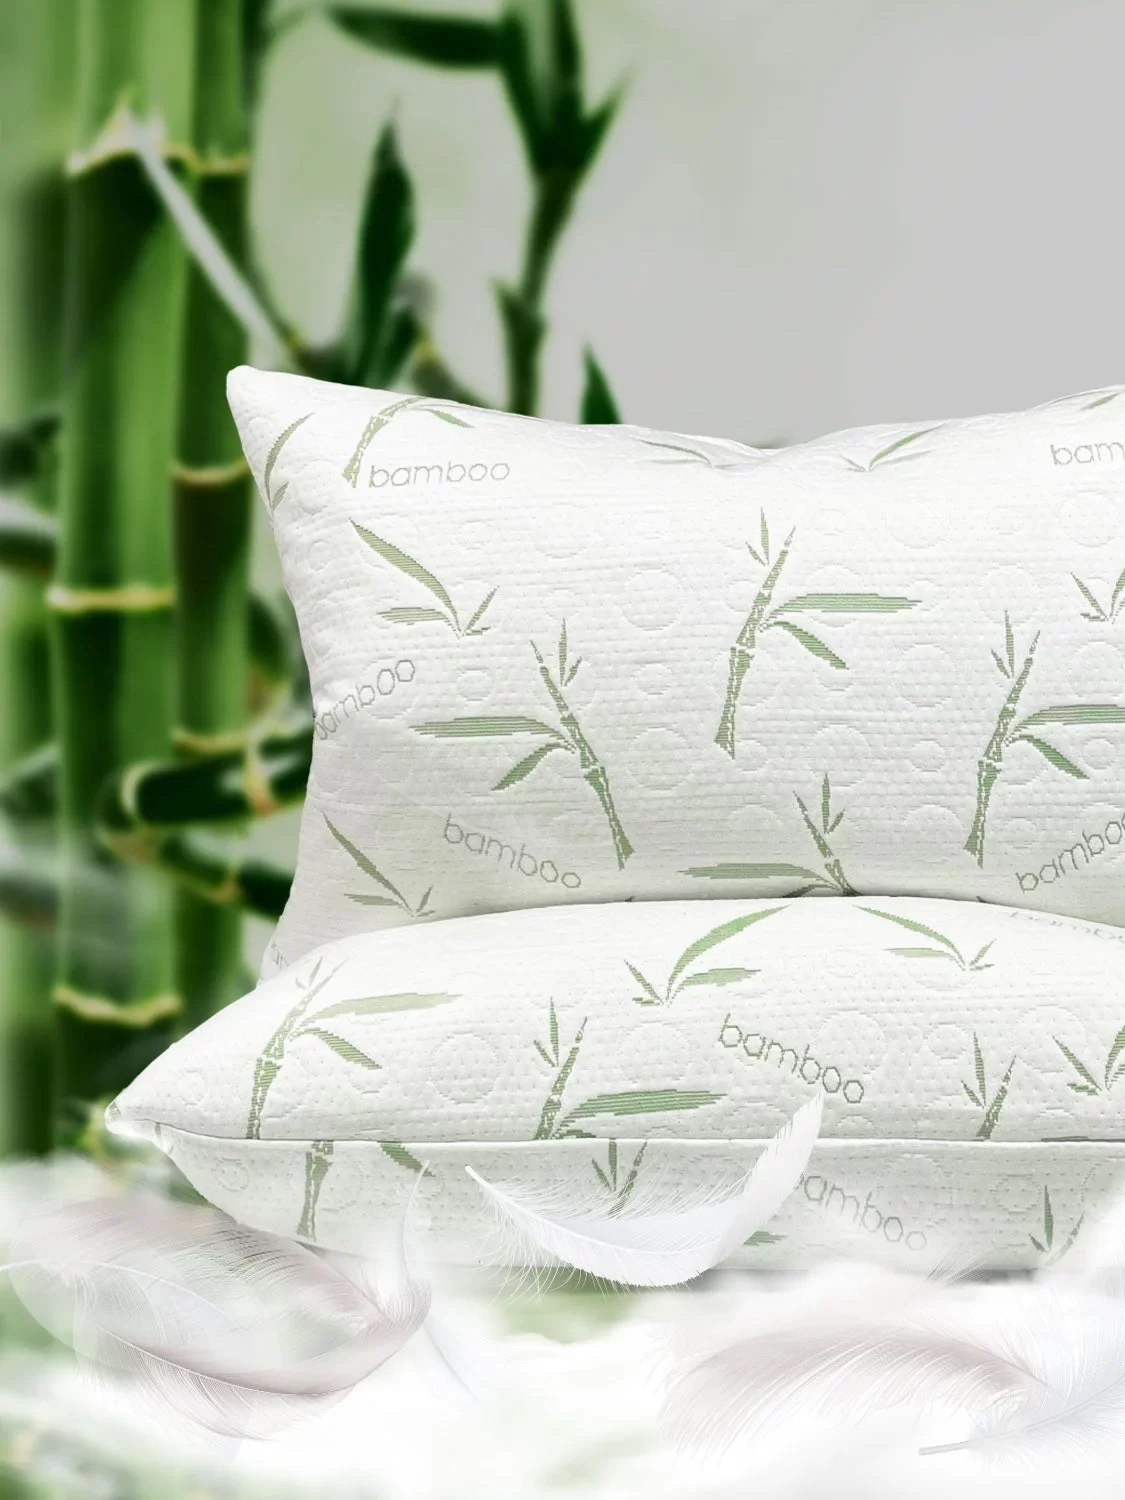 pillows materials bamboo-derived fabrics